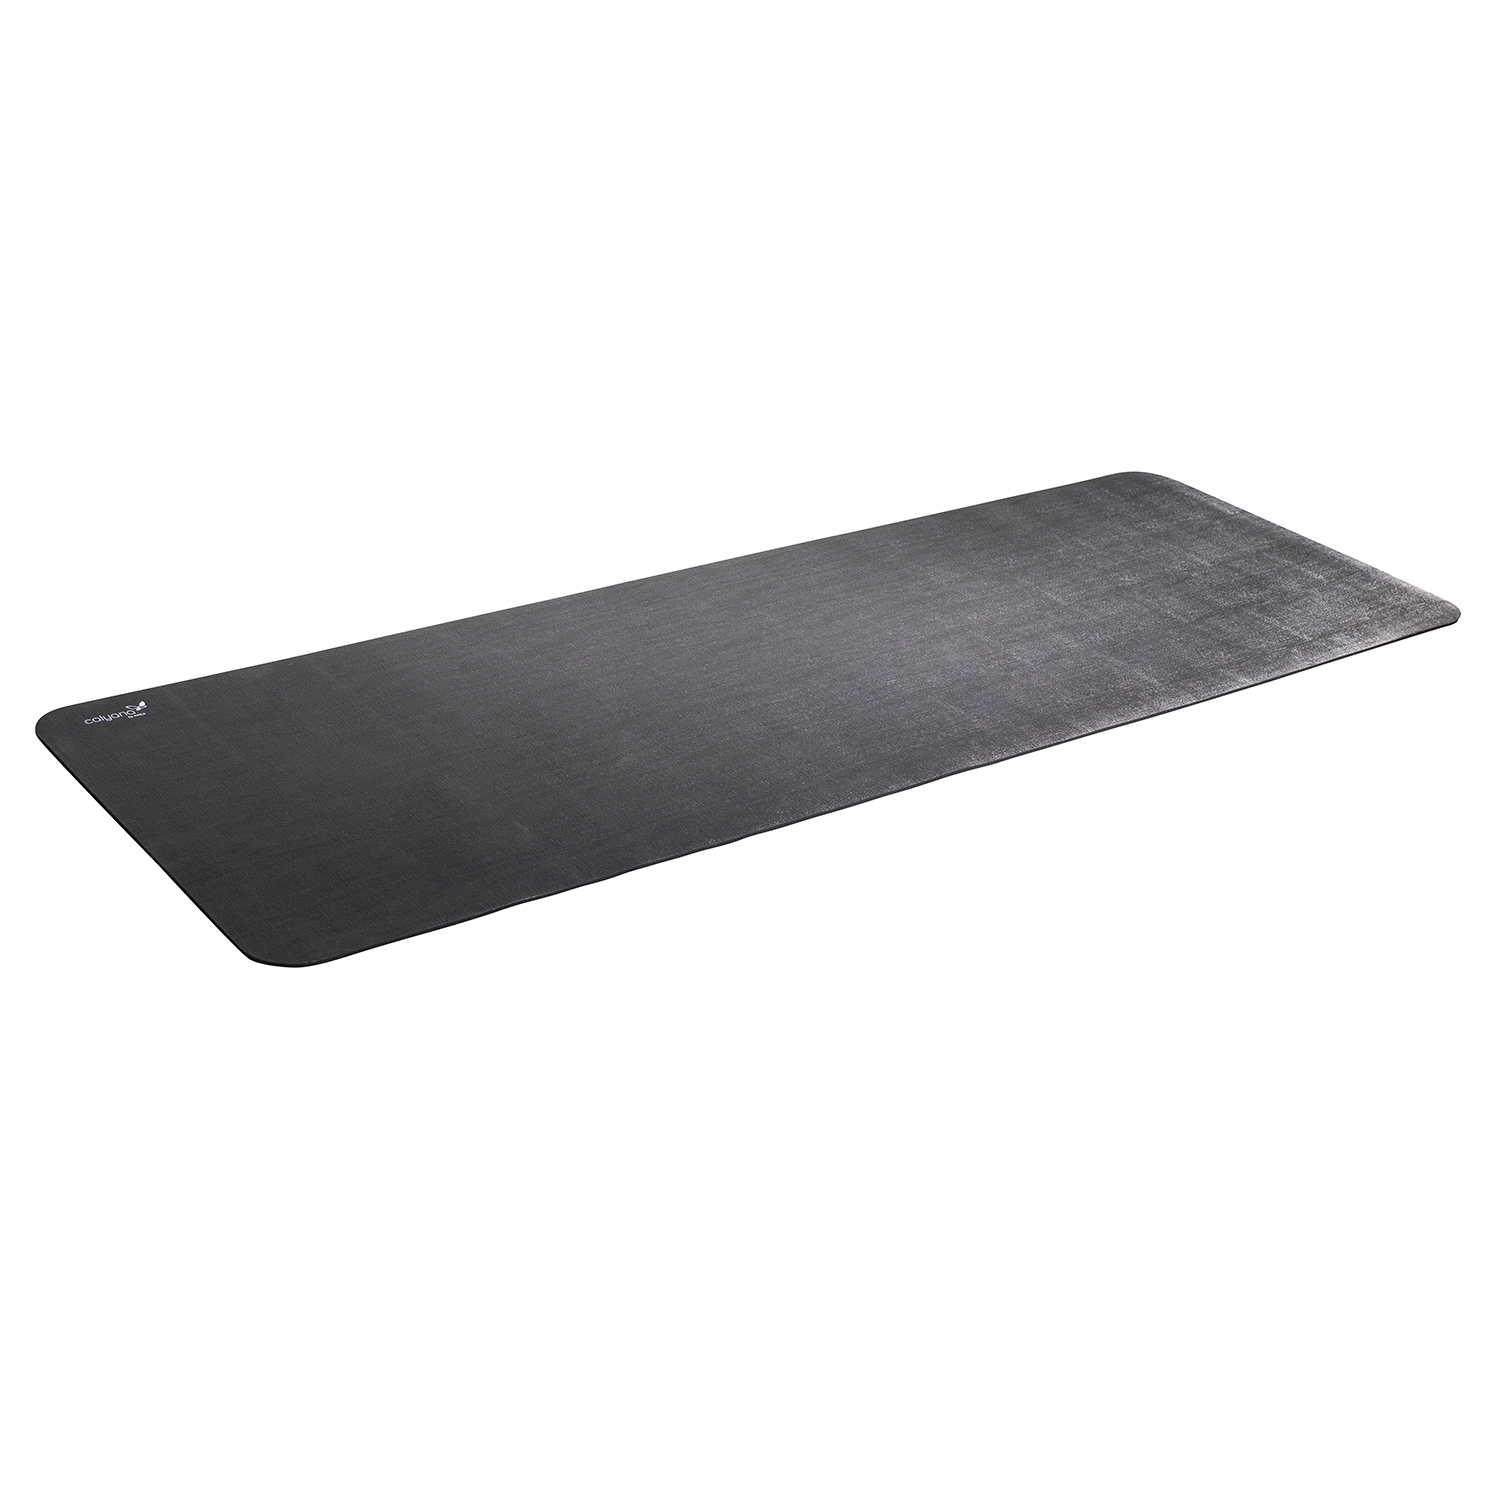 Airex mat Calyana Professional Yoga - 185 x 66 x 0,68 cm - stone grey